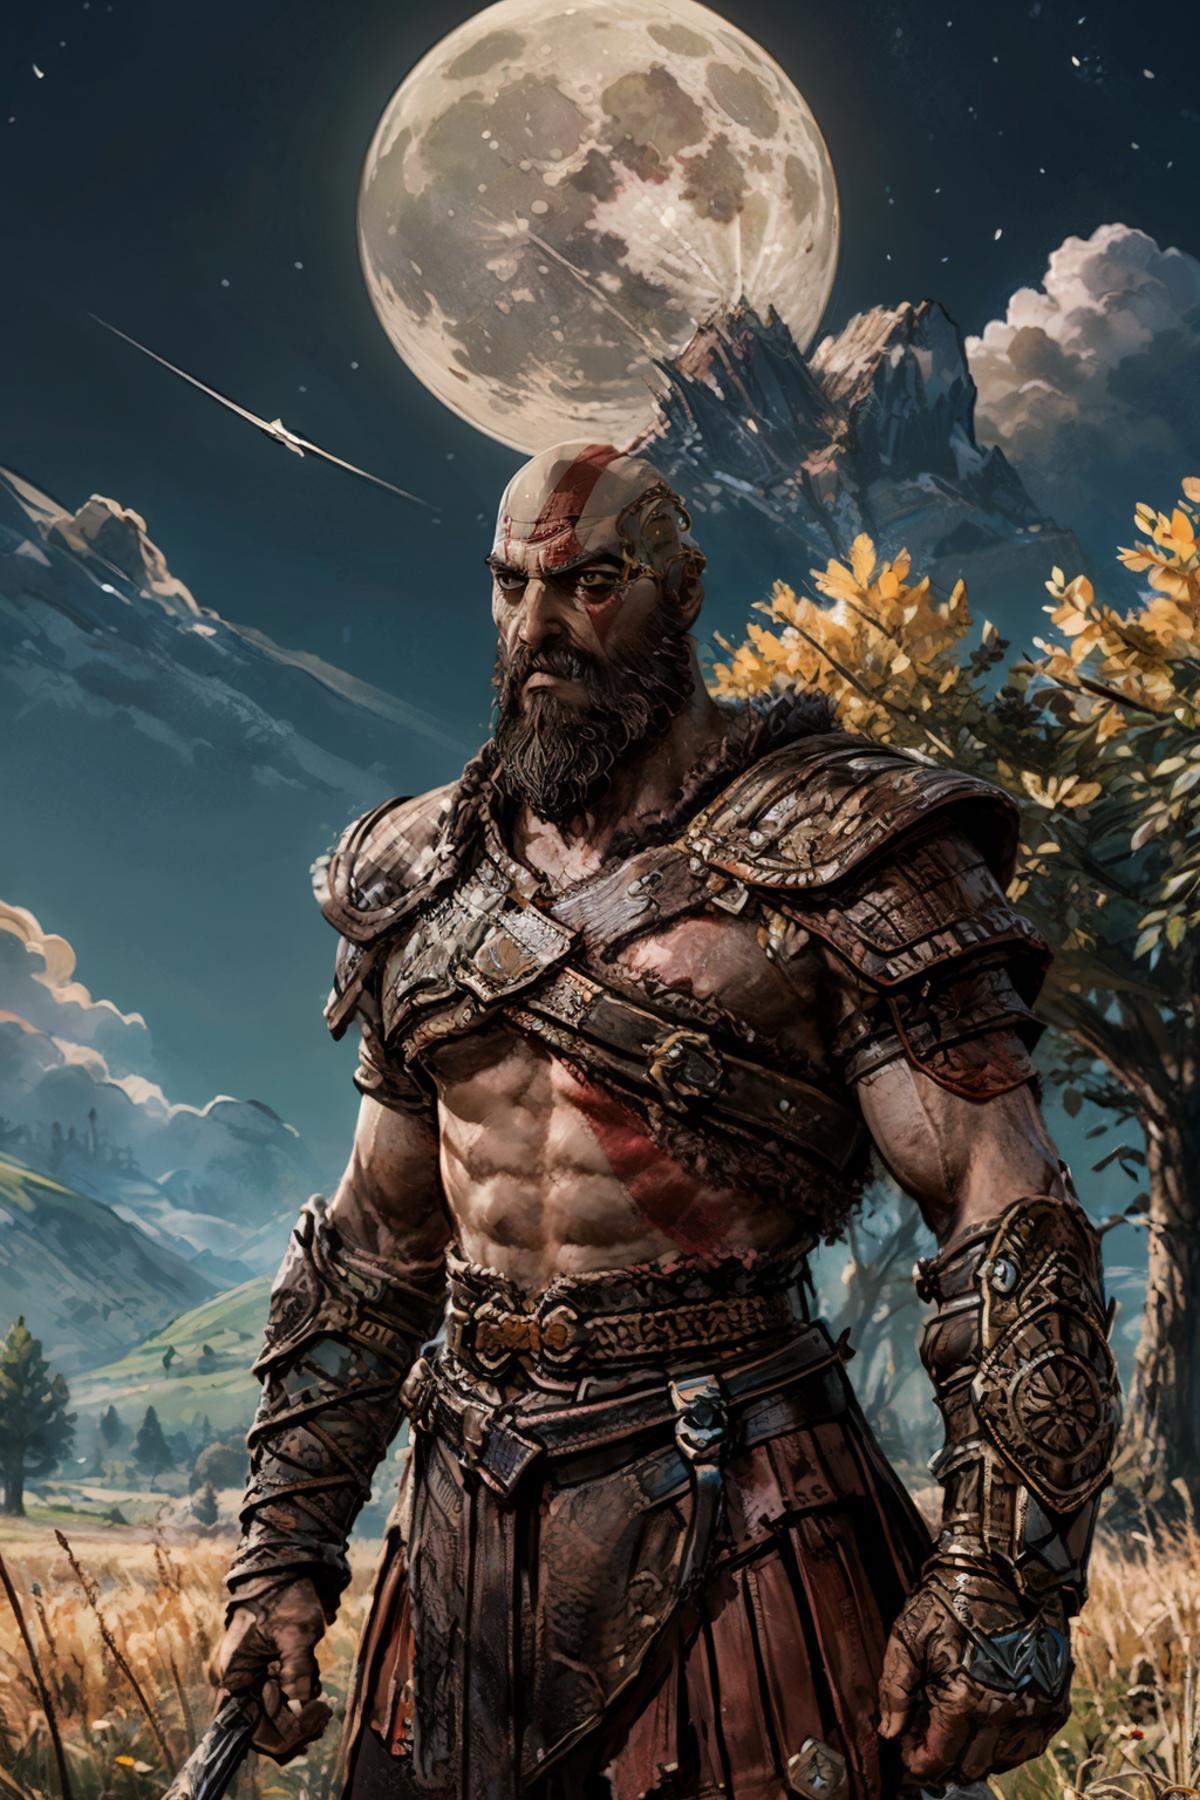 Kratos | God of War image by wikkitikki